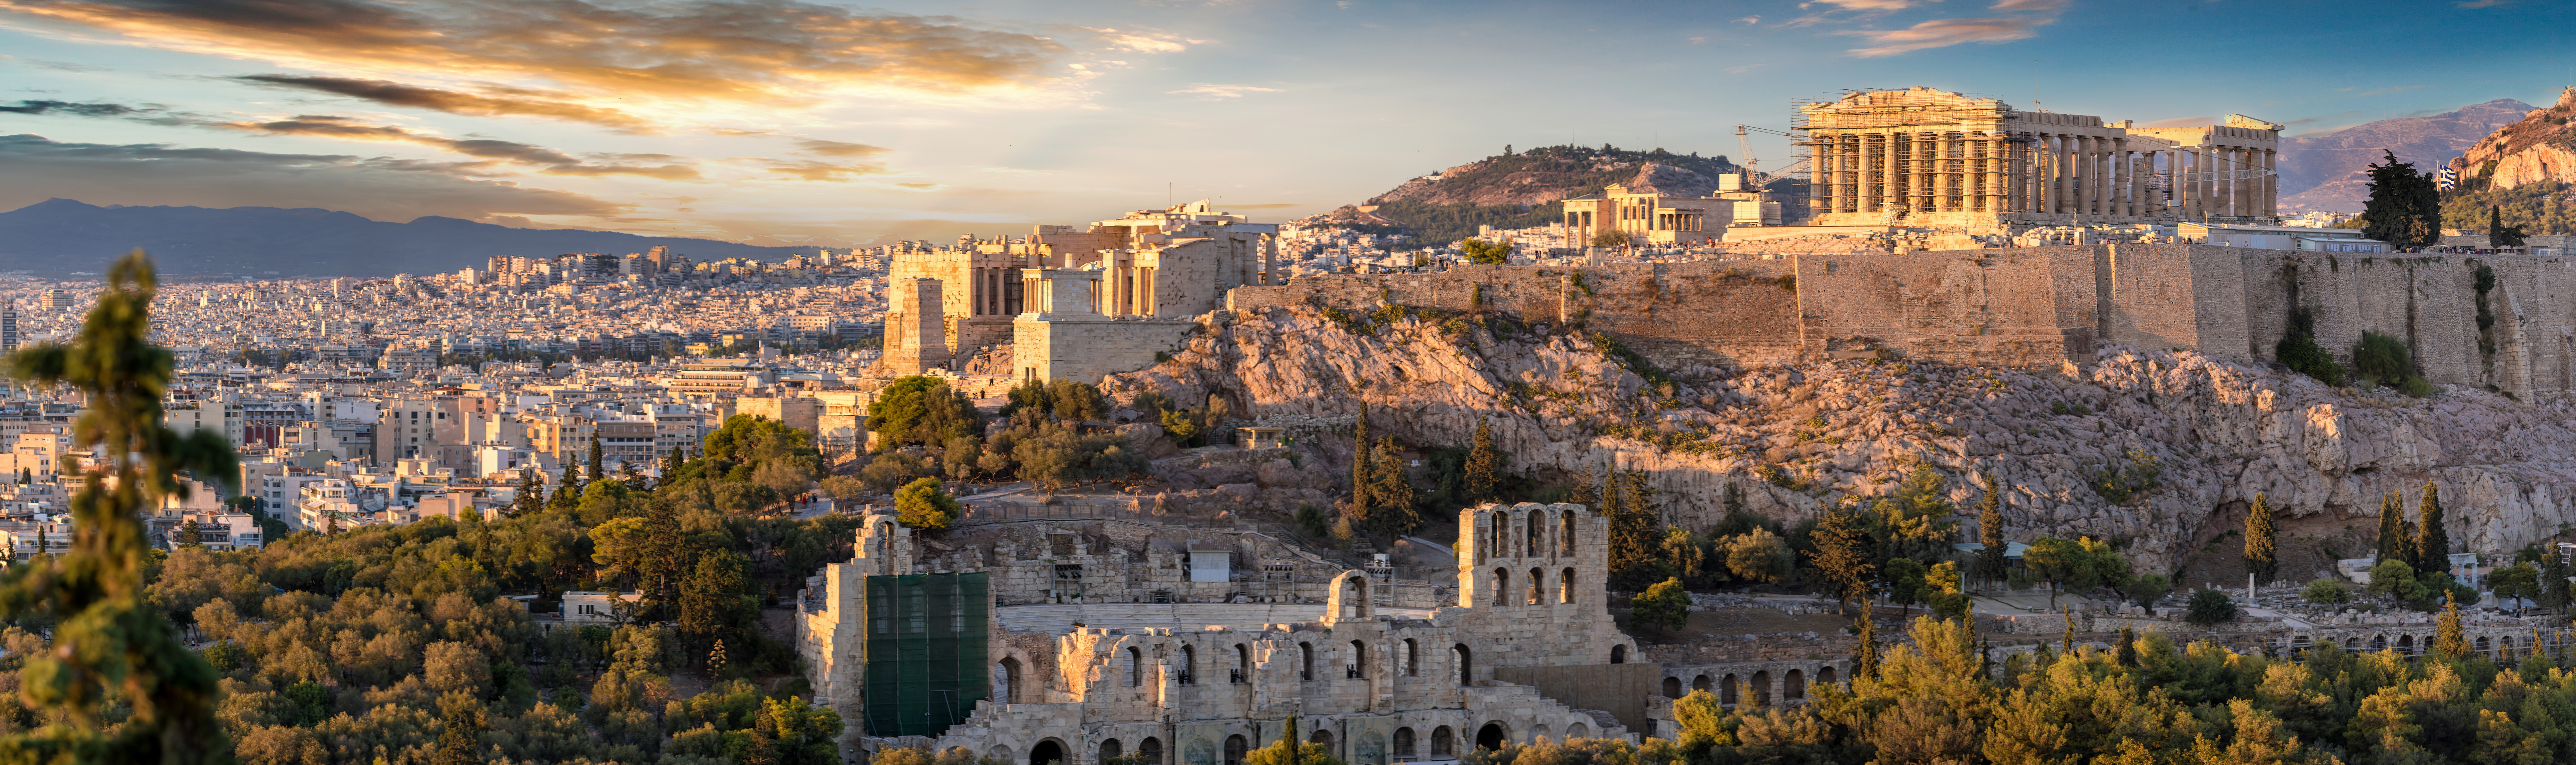 the_acropolis_of_athens_greece-istock-891497792-1920x570.jpg